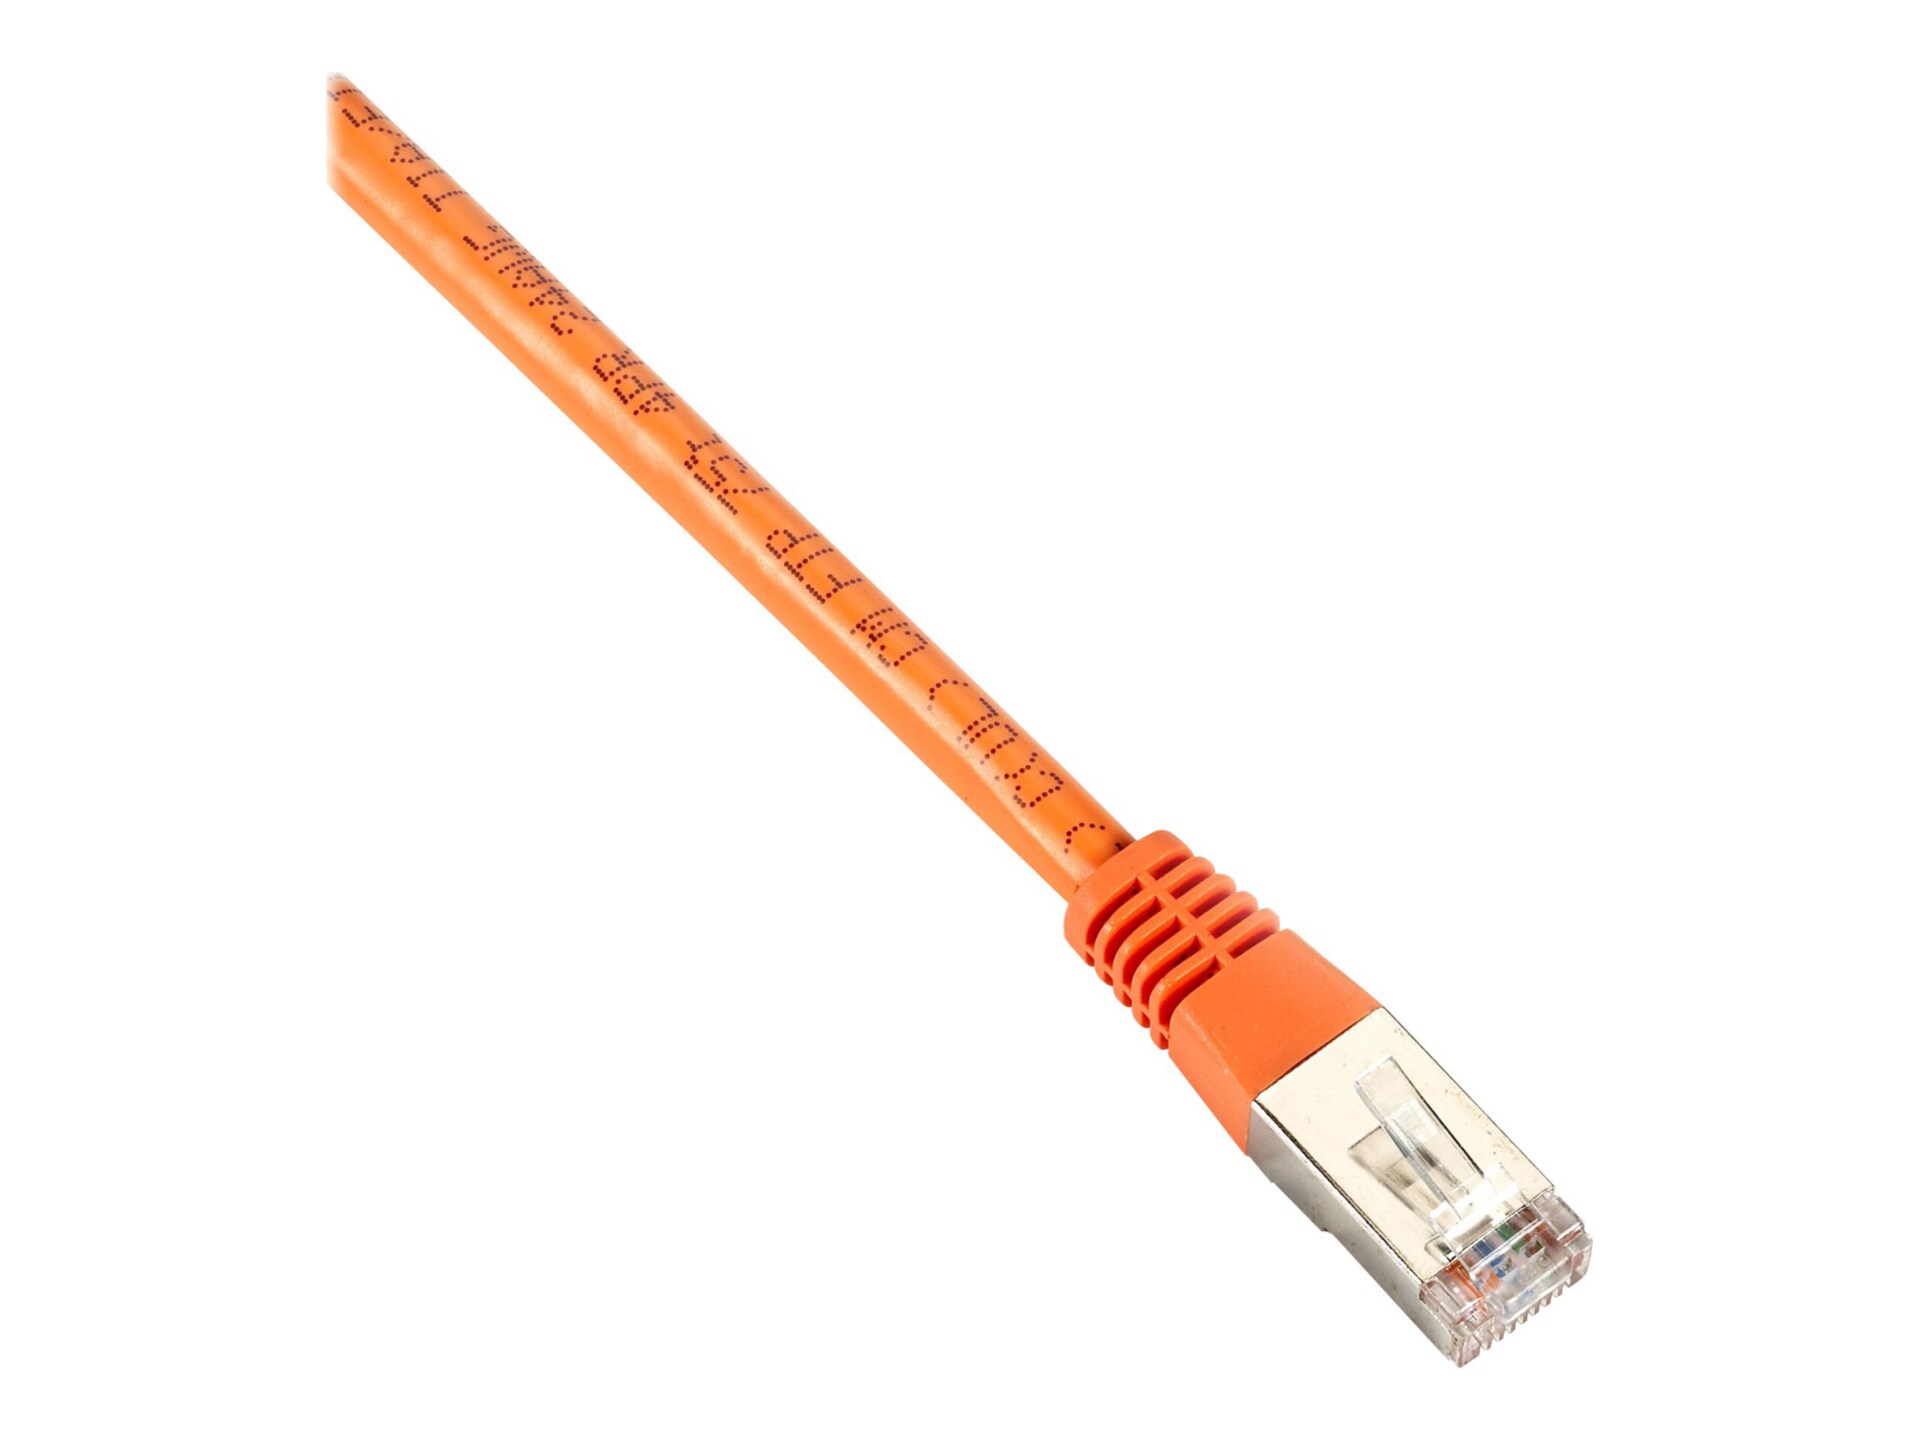 Black Box Backbone Cable patch cable - 30 cm - orange